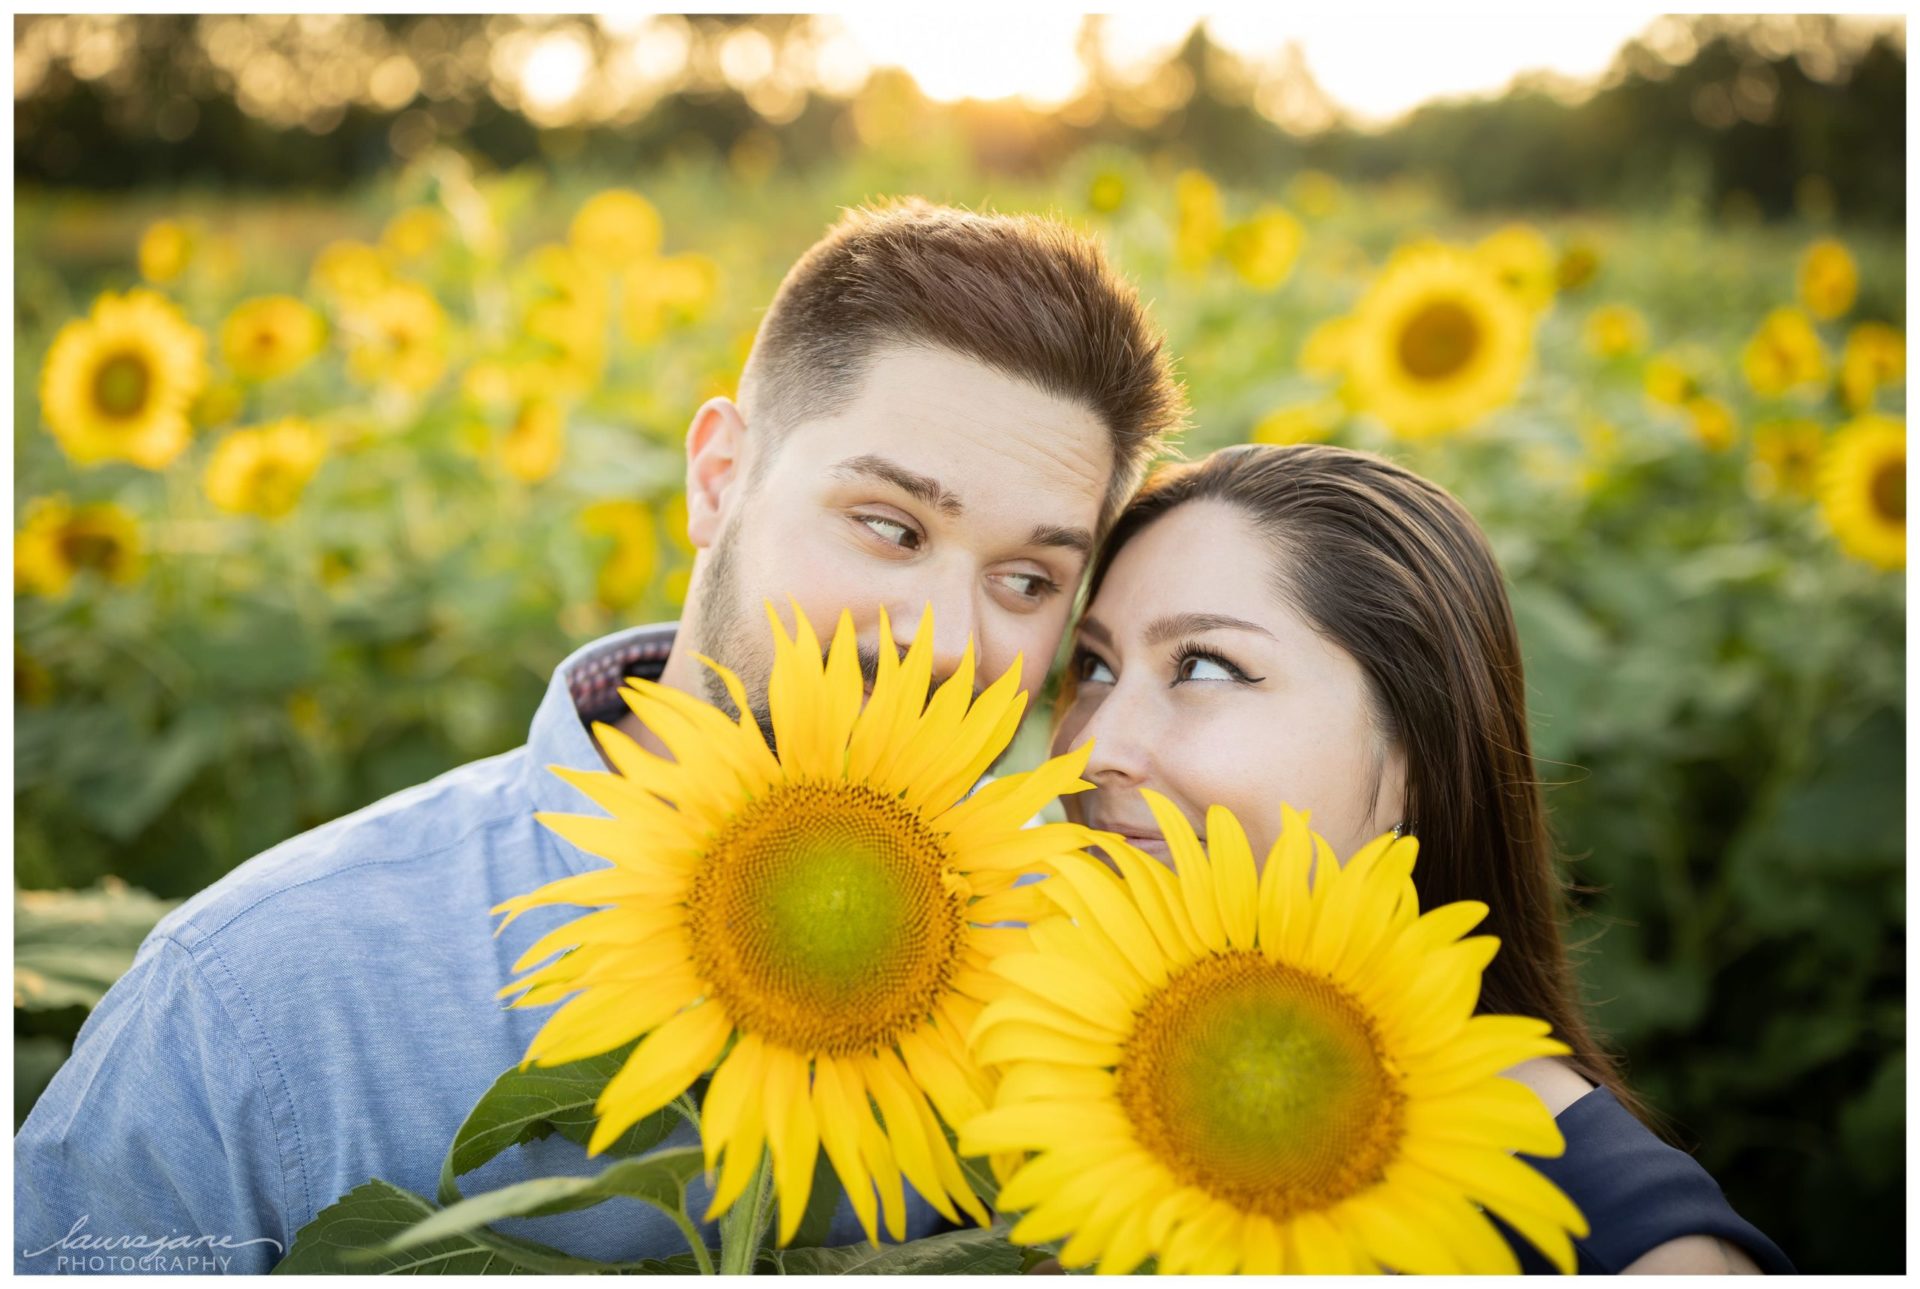 Engagement photo at Lannon Sunflower Farm